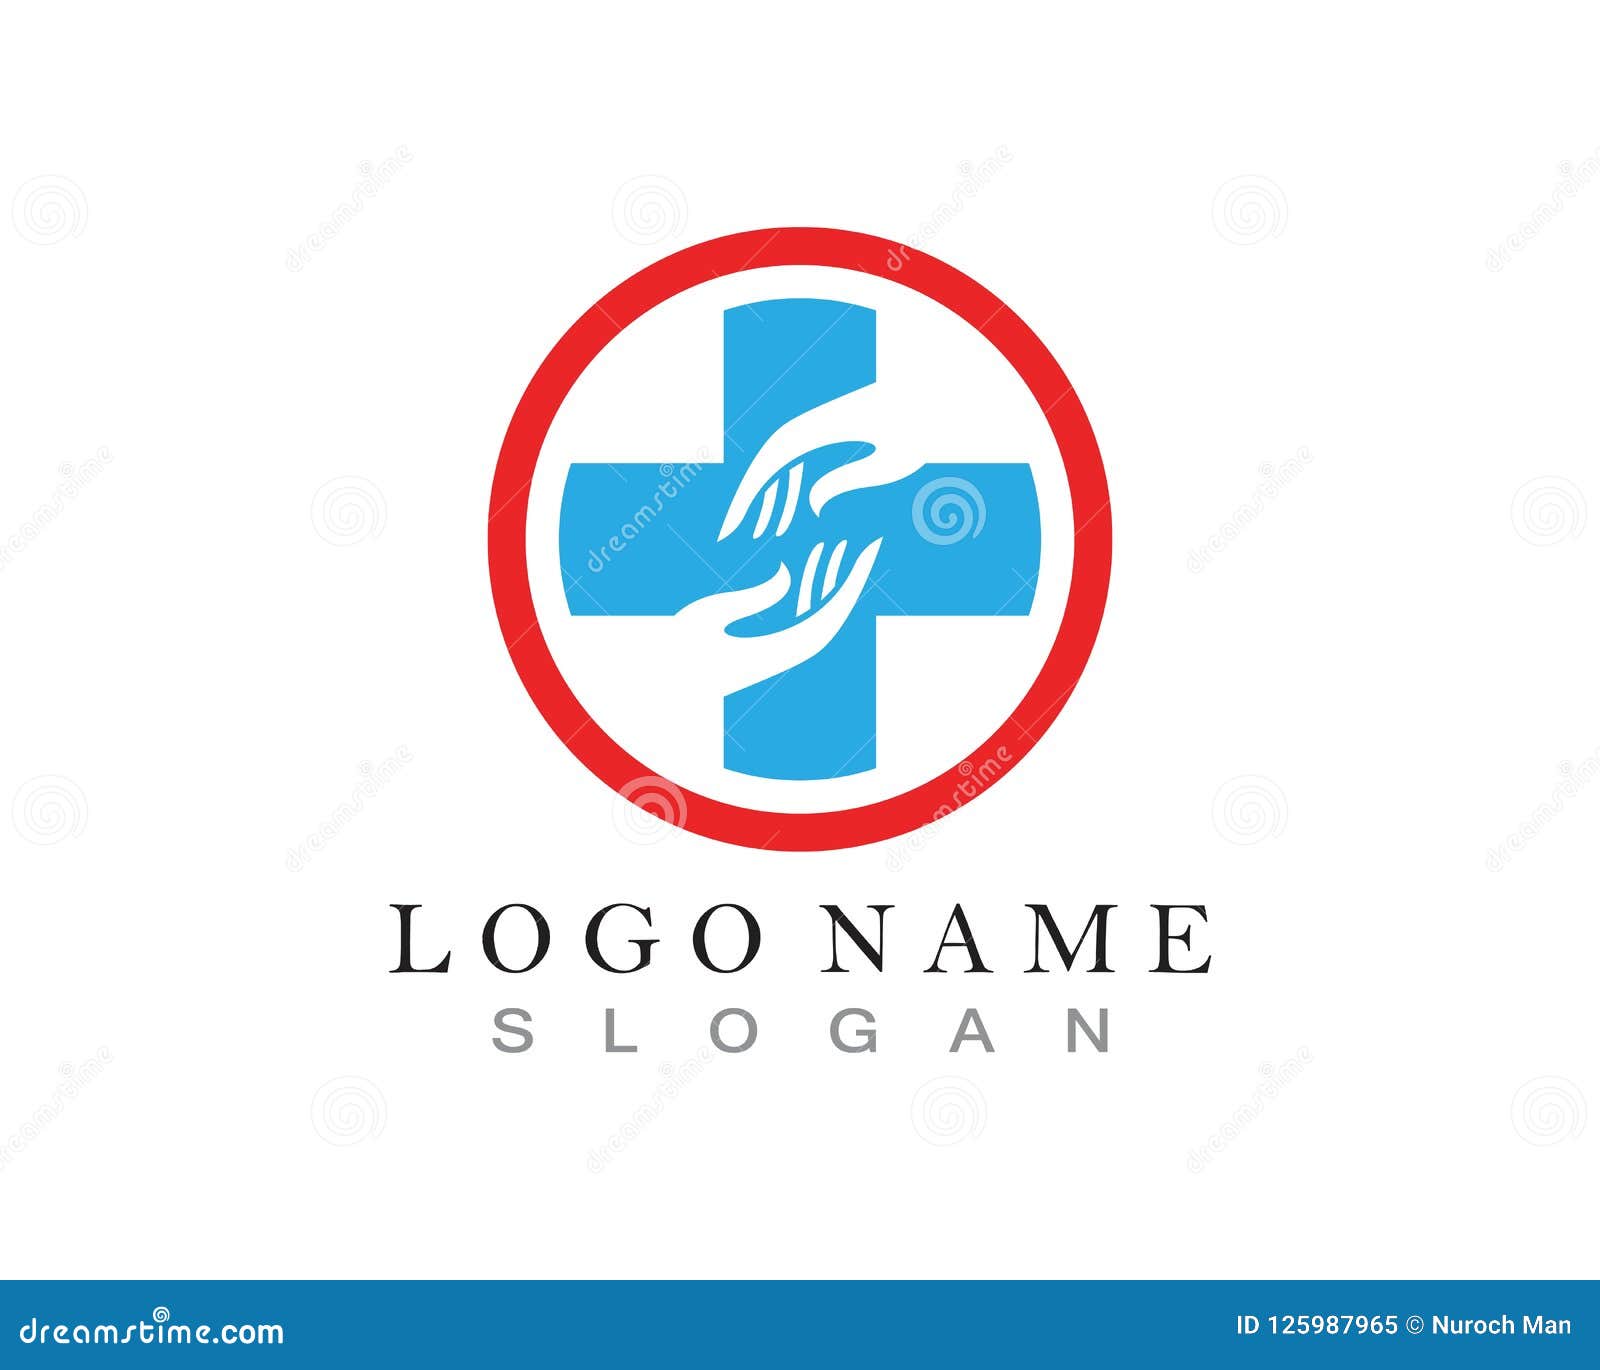 Hospital logo vector icons stock vector. Illustration of medical ...